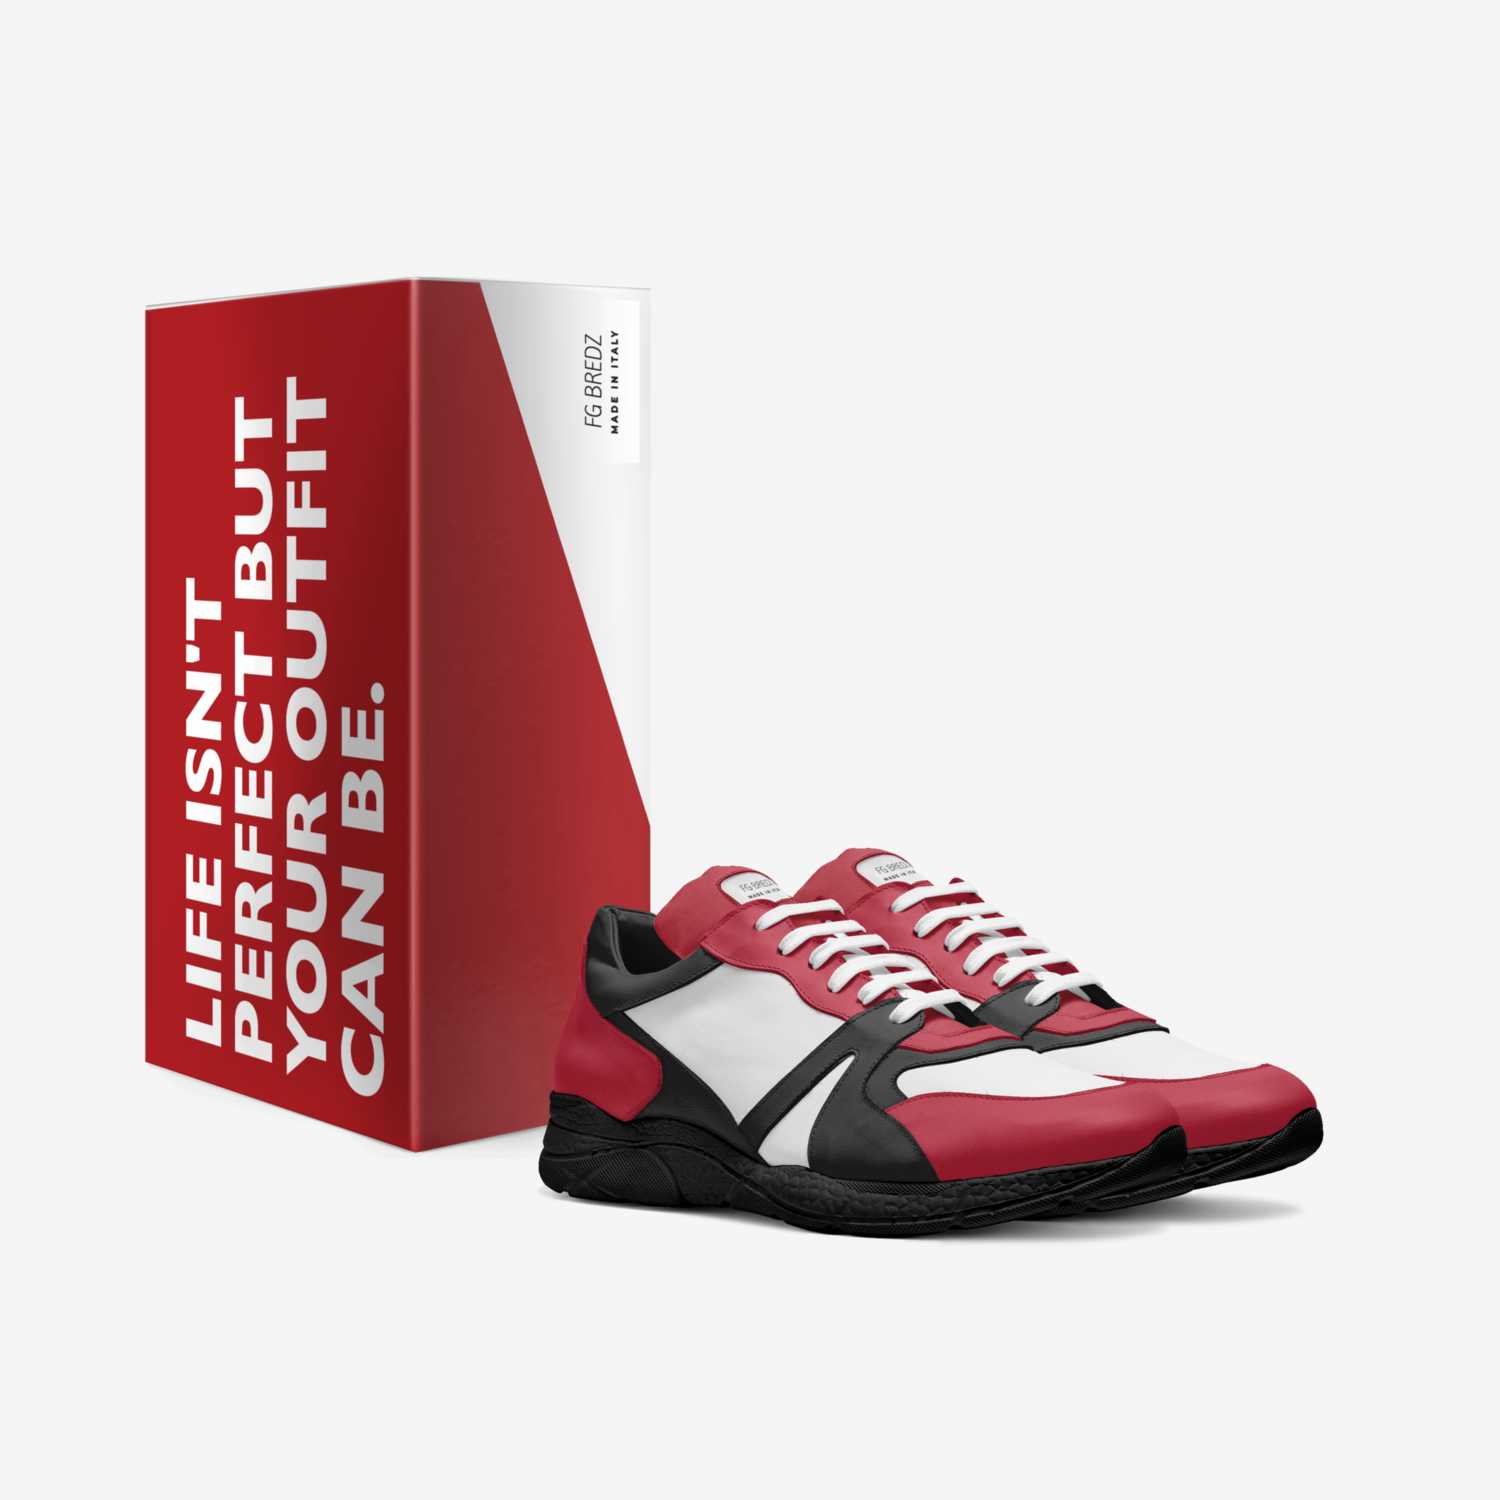 FG Bredz custom made in Italy shoes by Jojuan Carroll | Box view